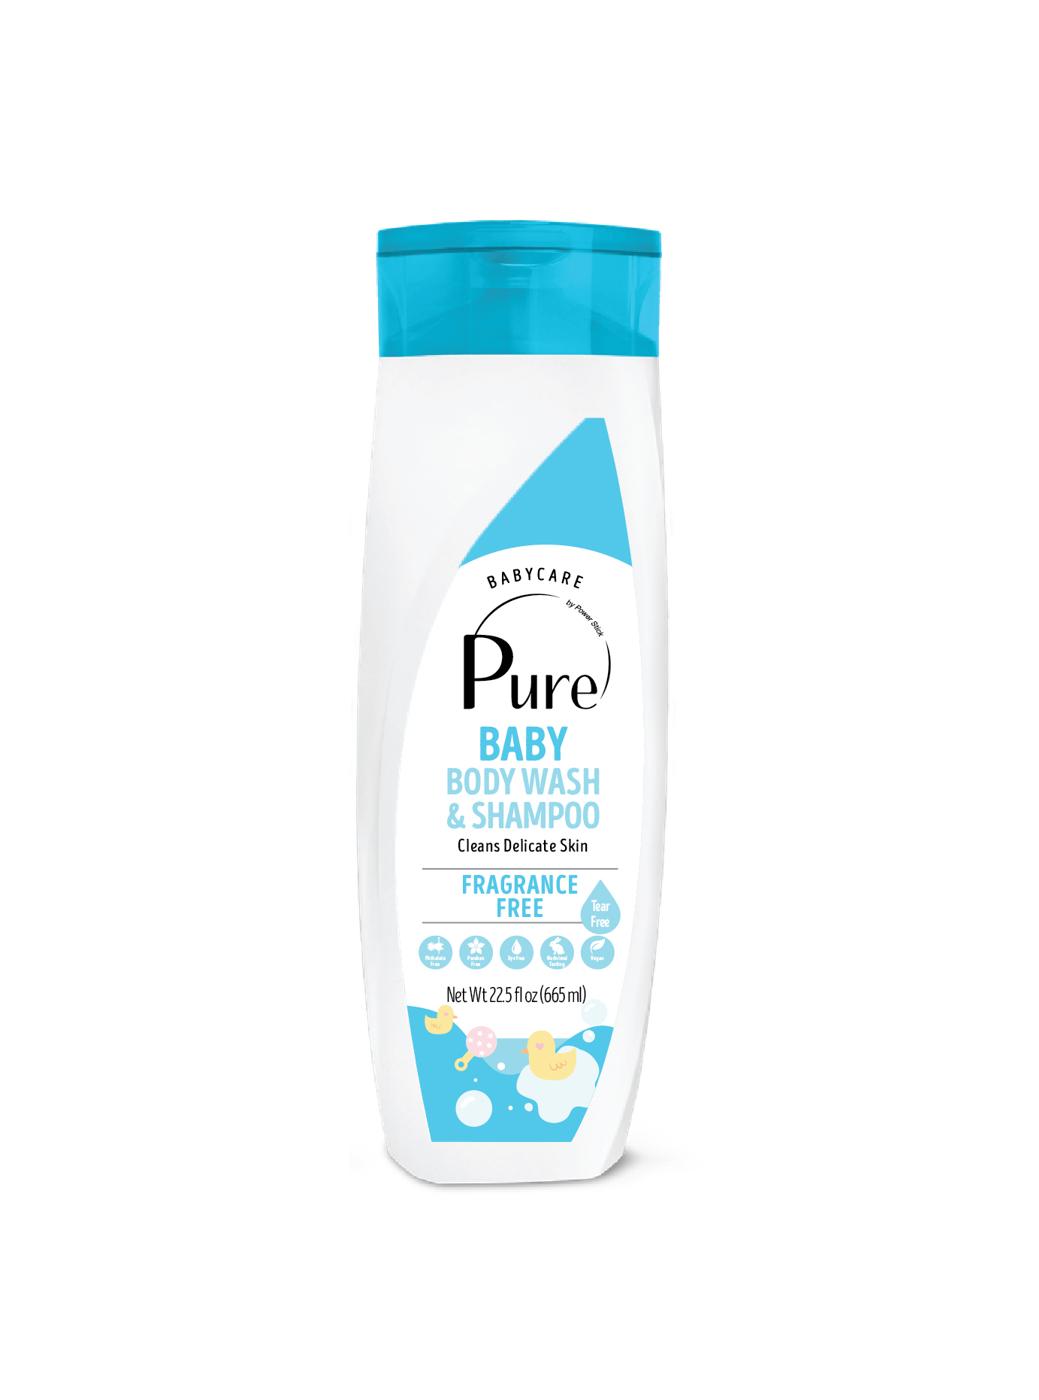 Pure Baby Body Wash & Shampoo - Fragrance Free; image 1 of 2